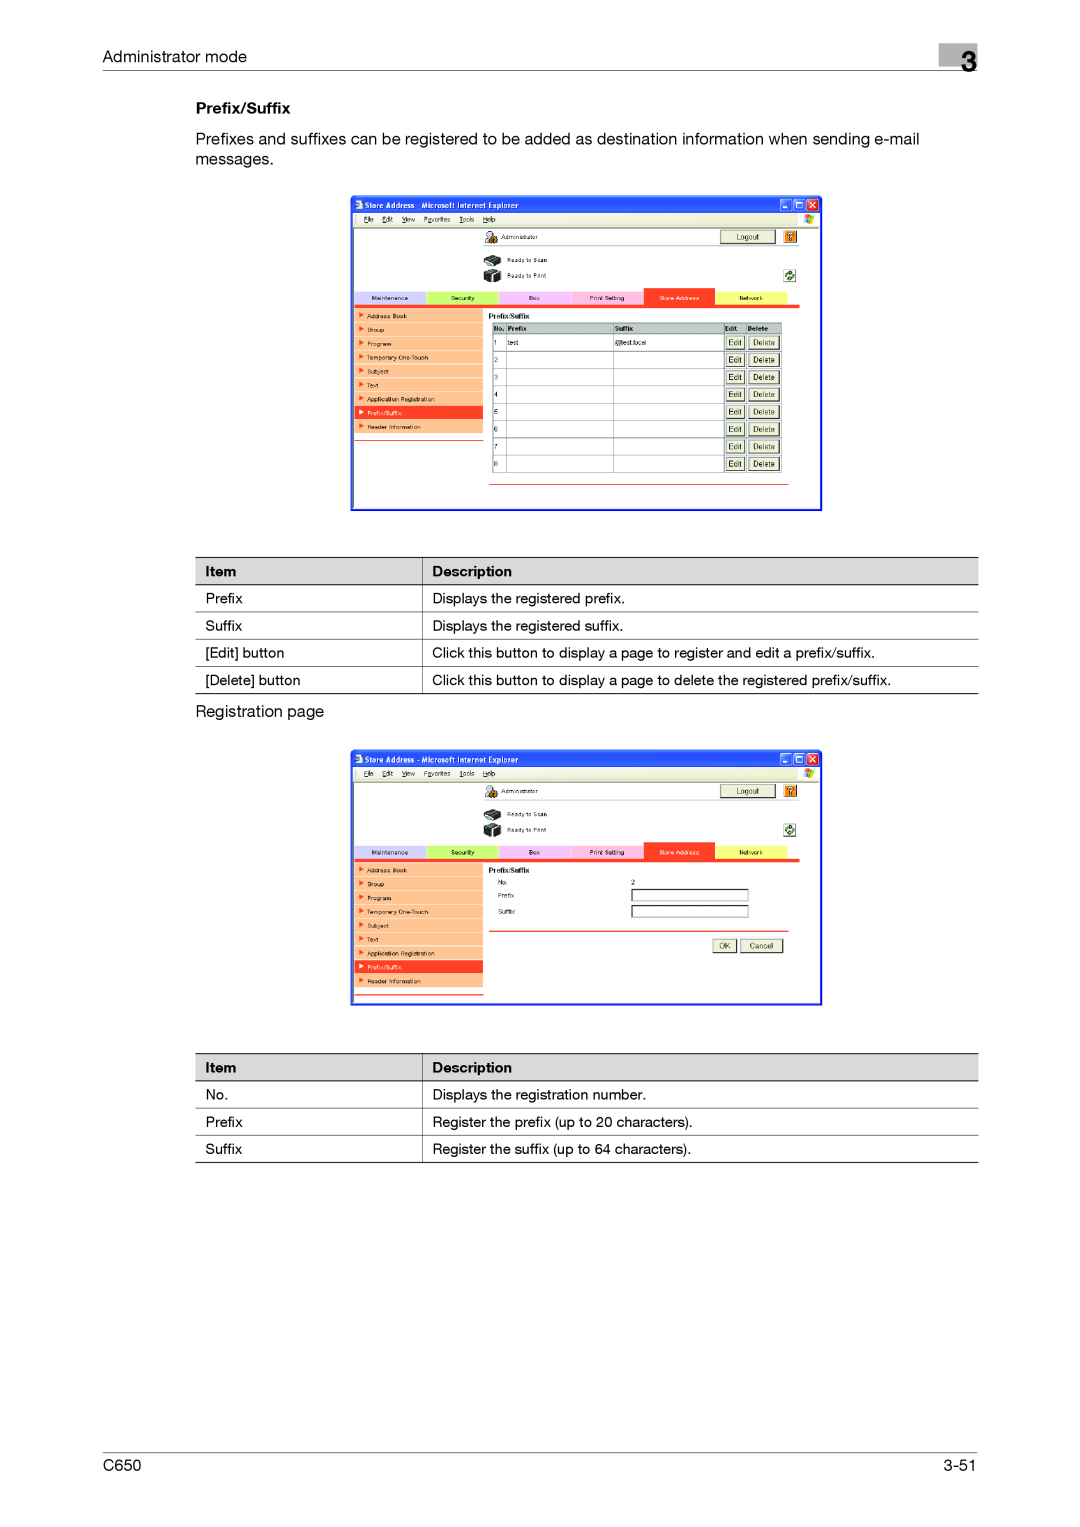 Konica Minolta C650 manual Administrator mode, Prefix/Suffix, Registration page, 3-51 